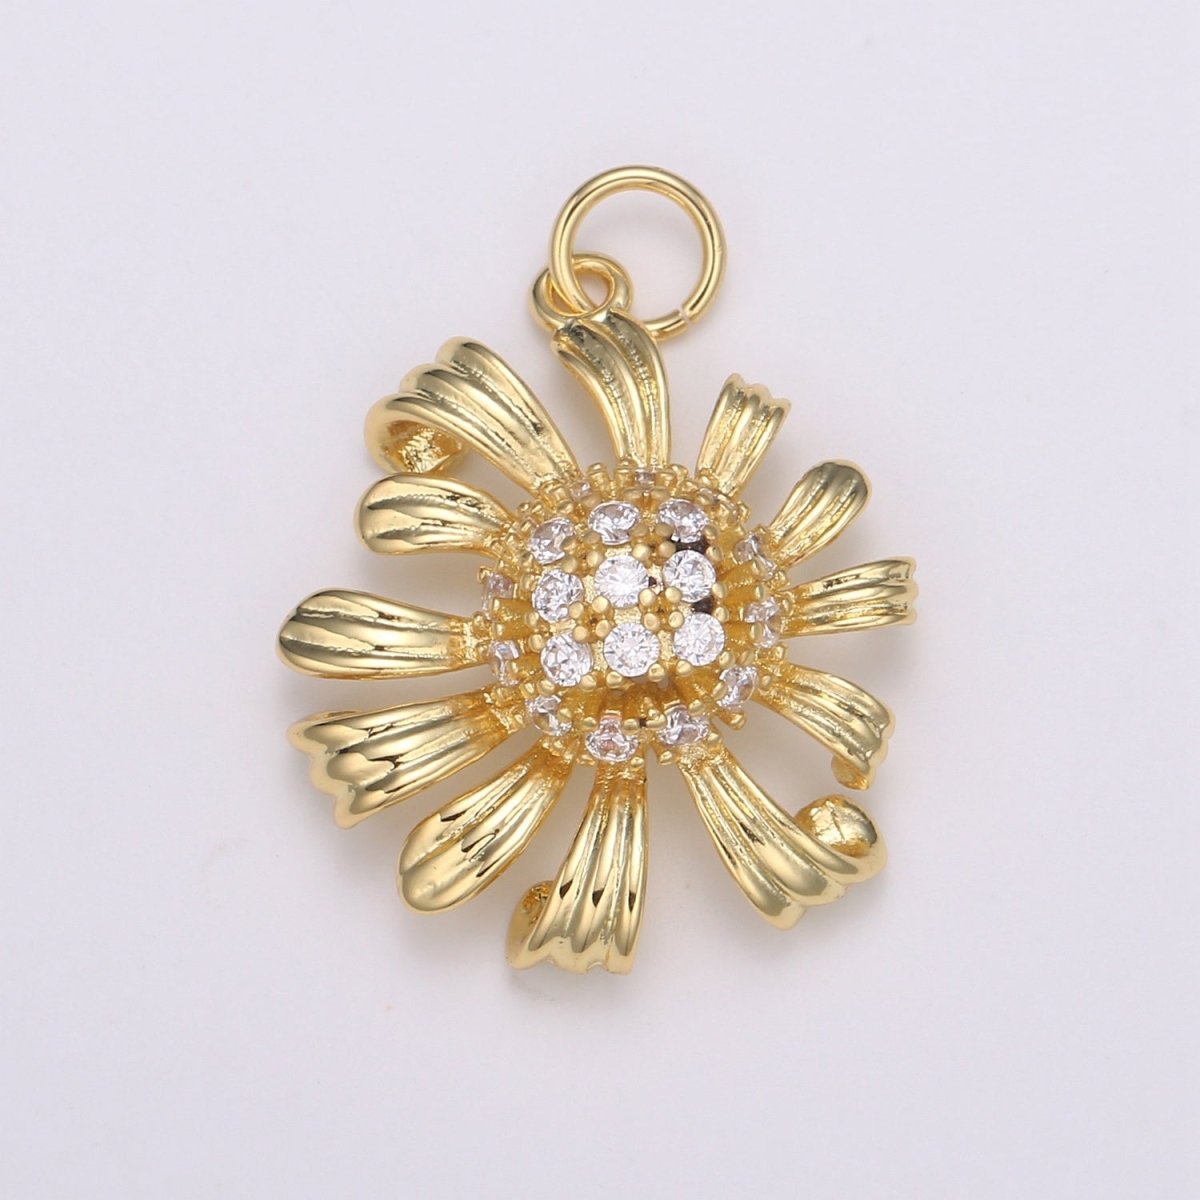 Gold Daisy,JasmineCharm 25.5x18mm - Mini Flower Charm Dainty Sun Flower Charm Snow flake for bracelet earring necklace supply E-196 - DLUXCA